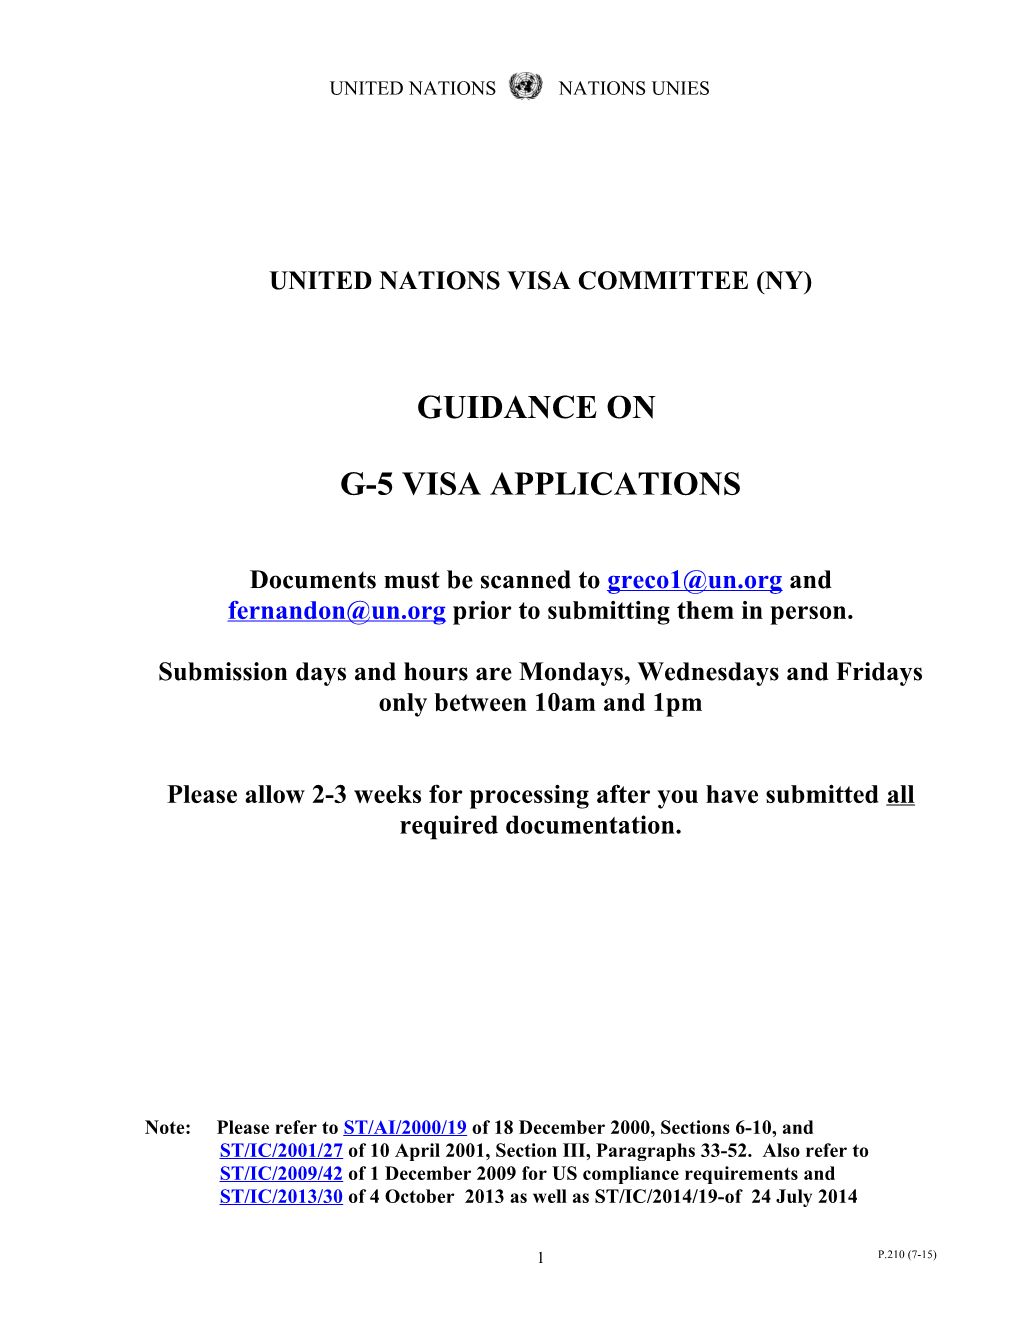 United Nations Visa Committee (Ny)